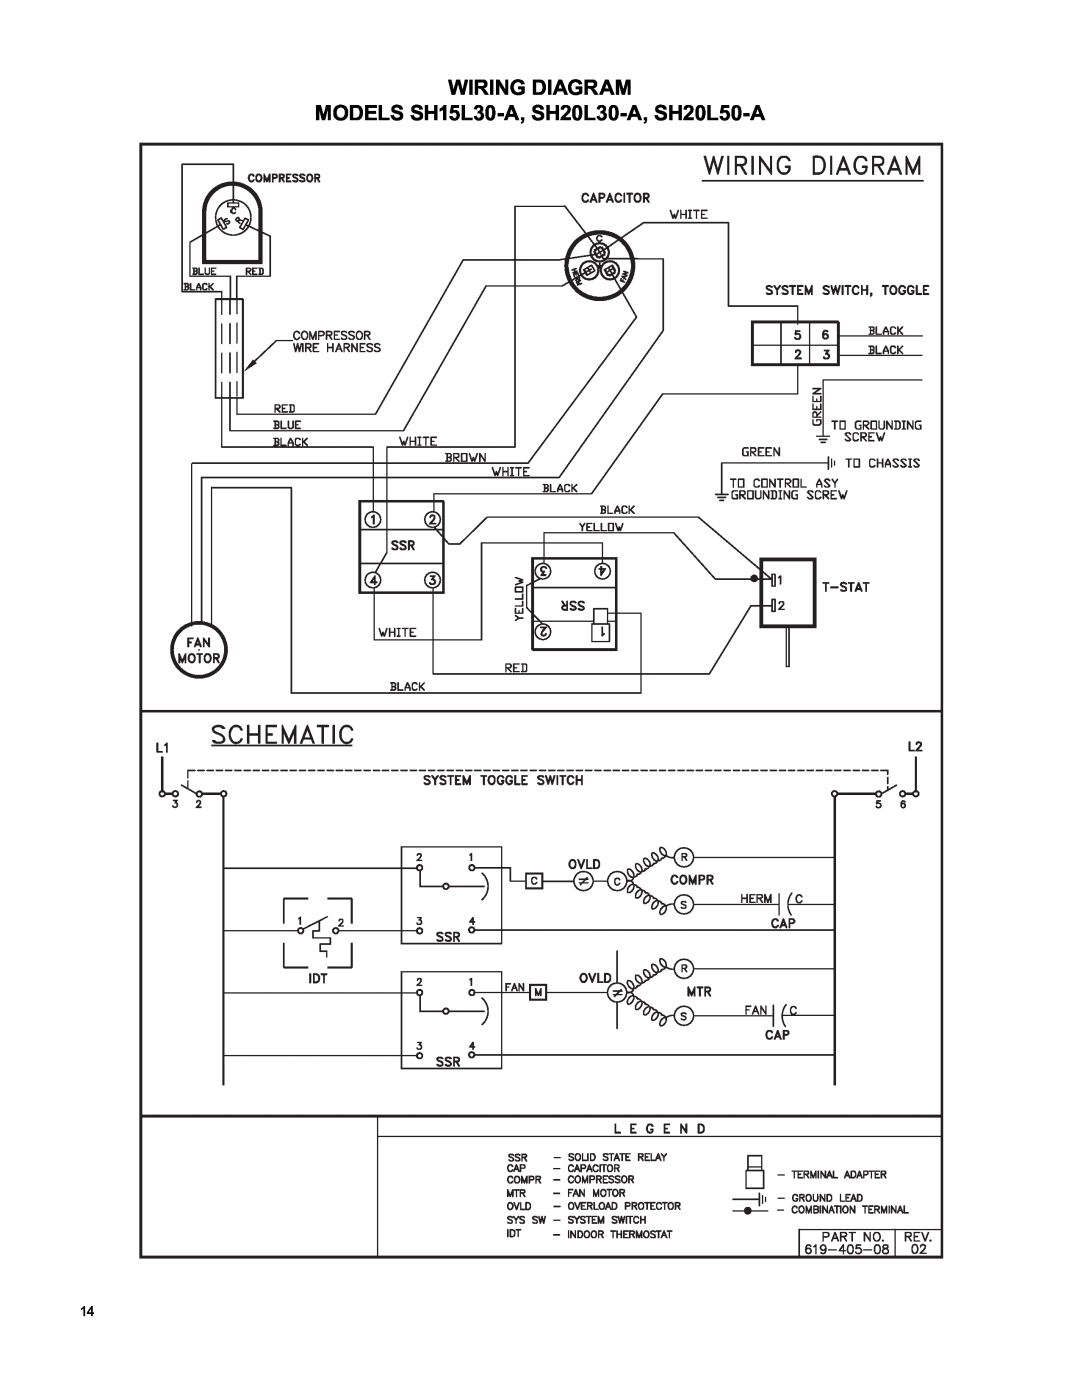 Friedrich manual Wiring Diagram, MODELS SH15L30-A, SH20L30-A, SH20L50-A 